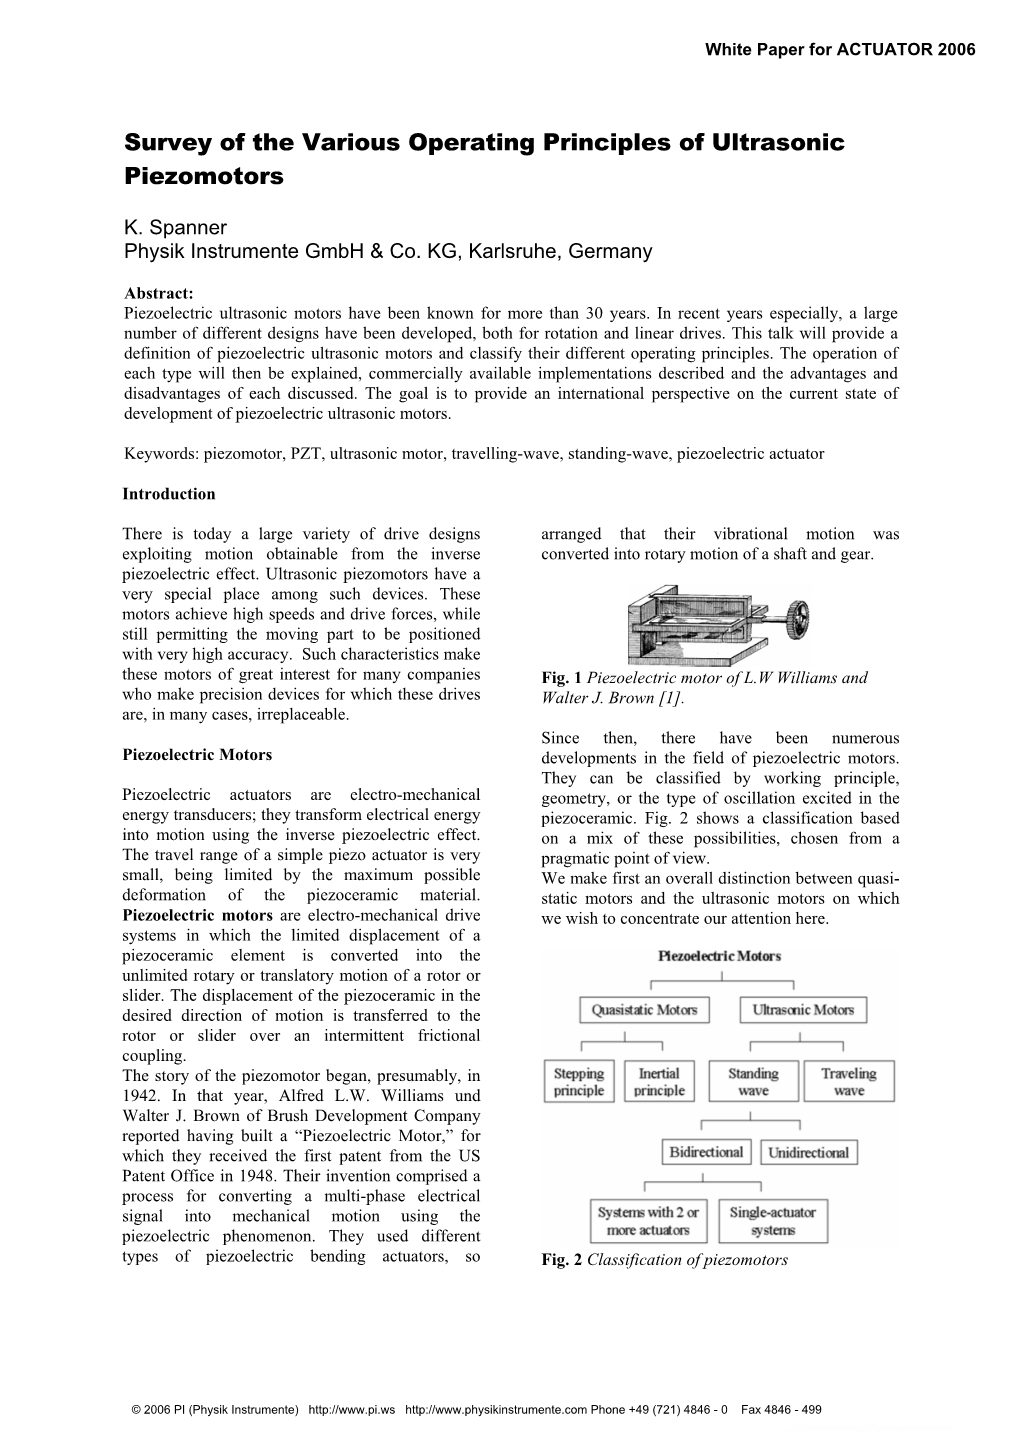 Actuator 2006: Ultrasonic Piezoelectric Motor